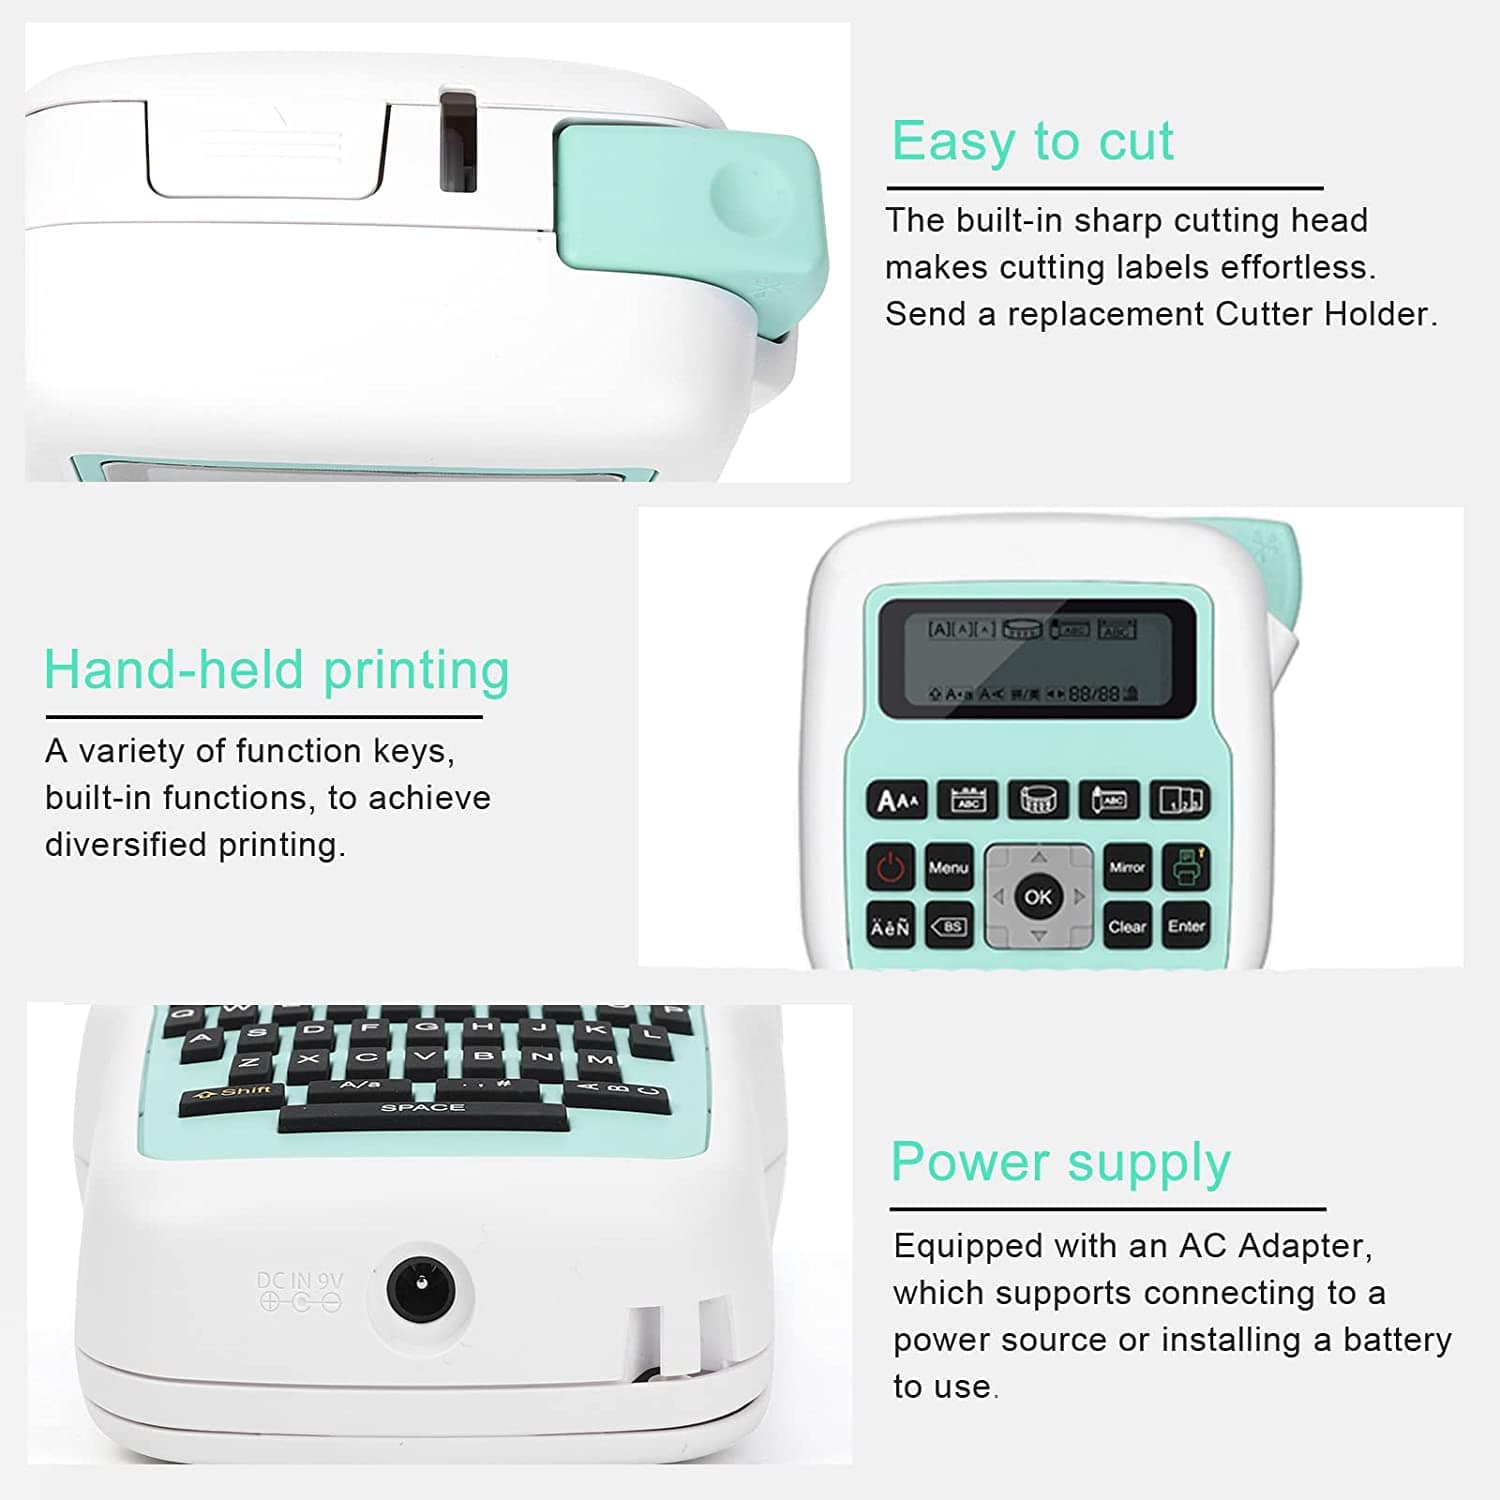 E1000 Handheld Industrial Label Maker | Green - Phomemo